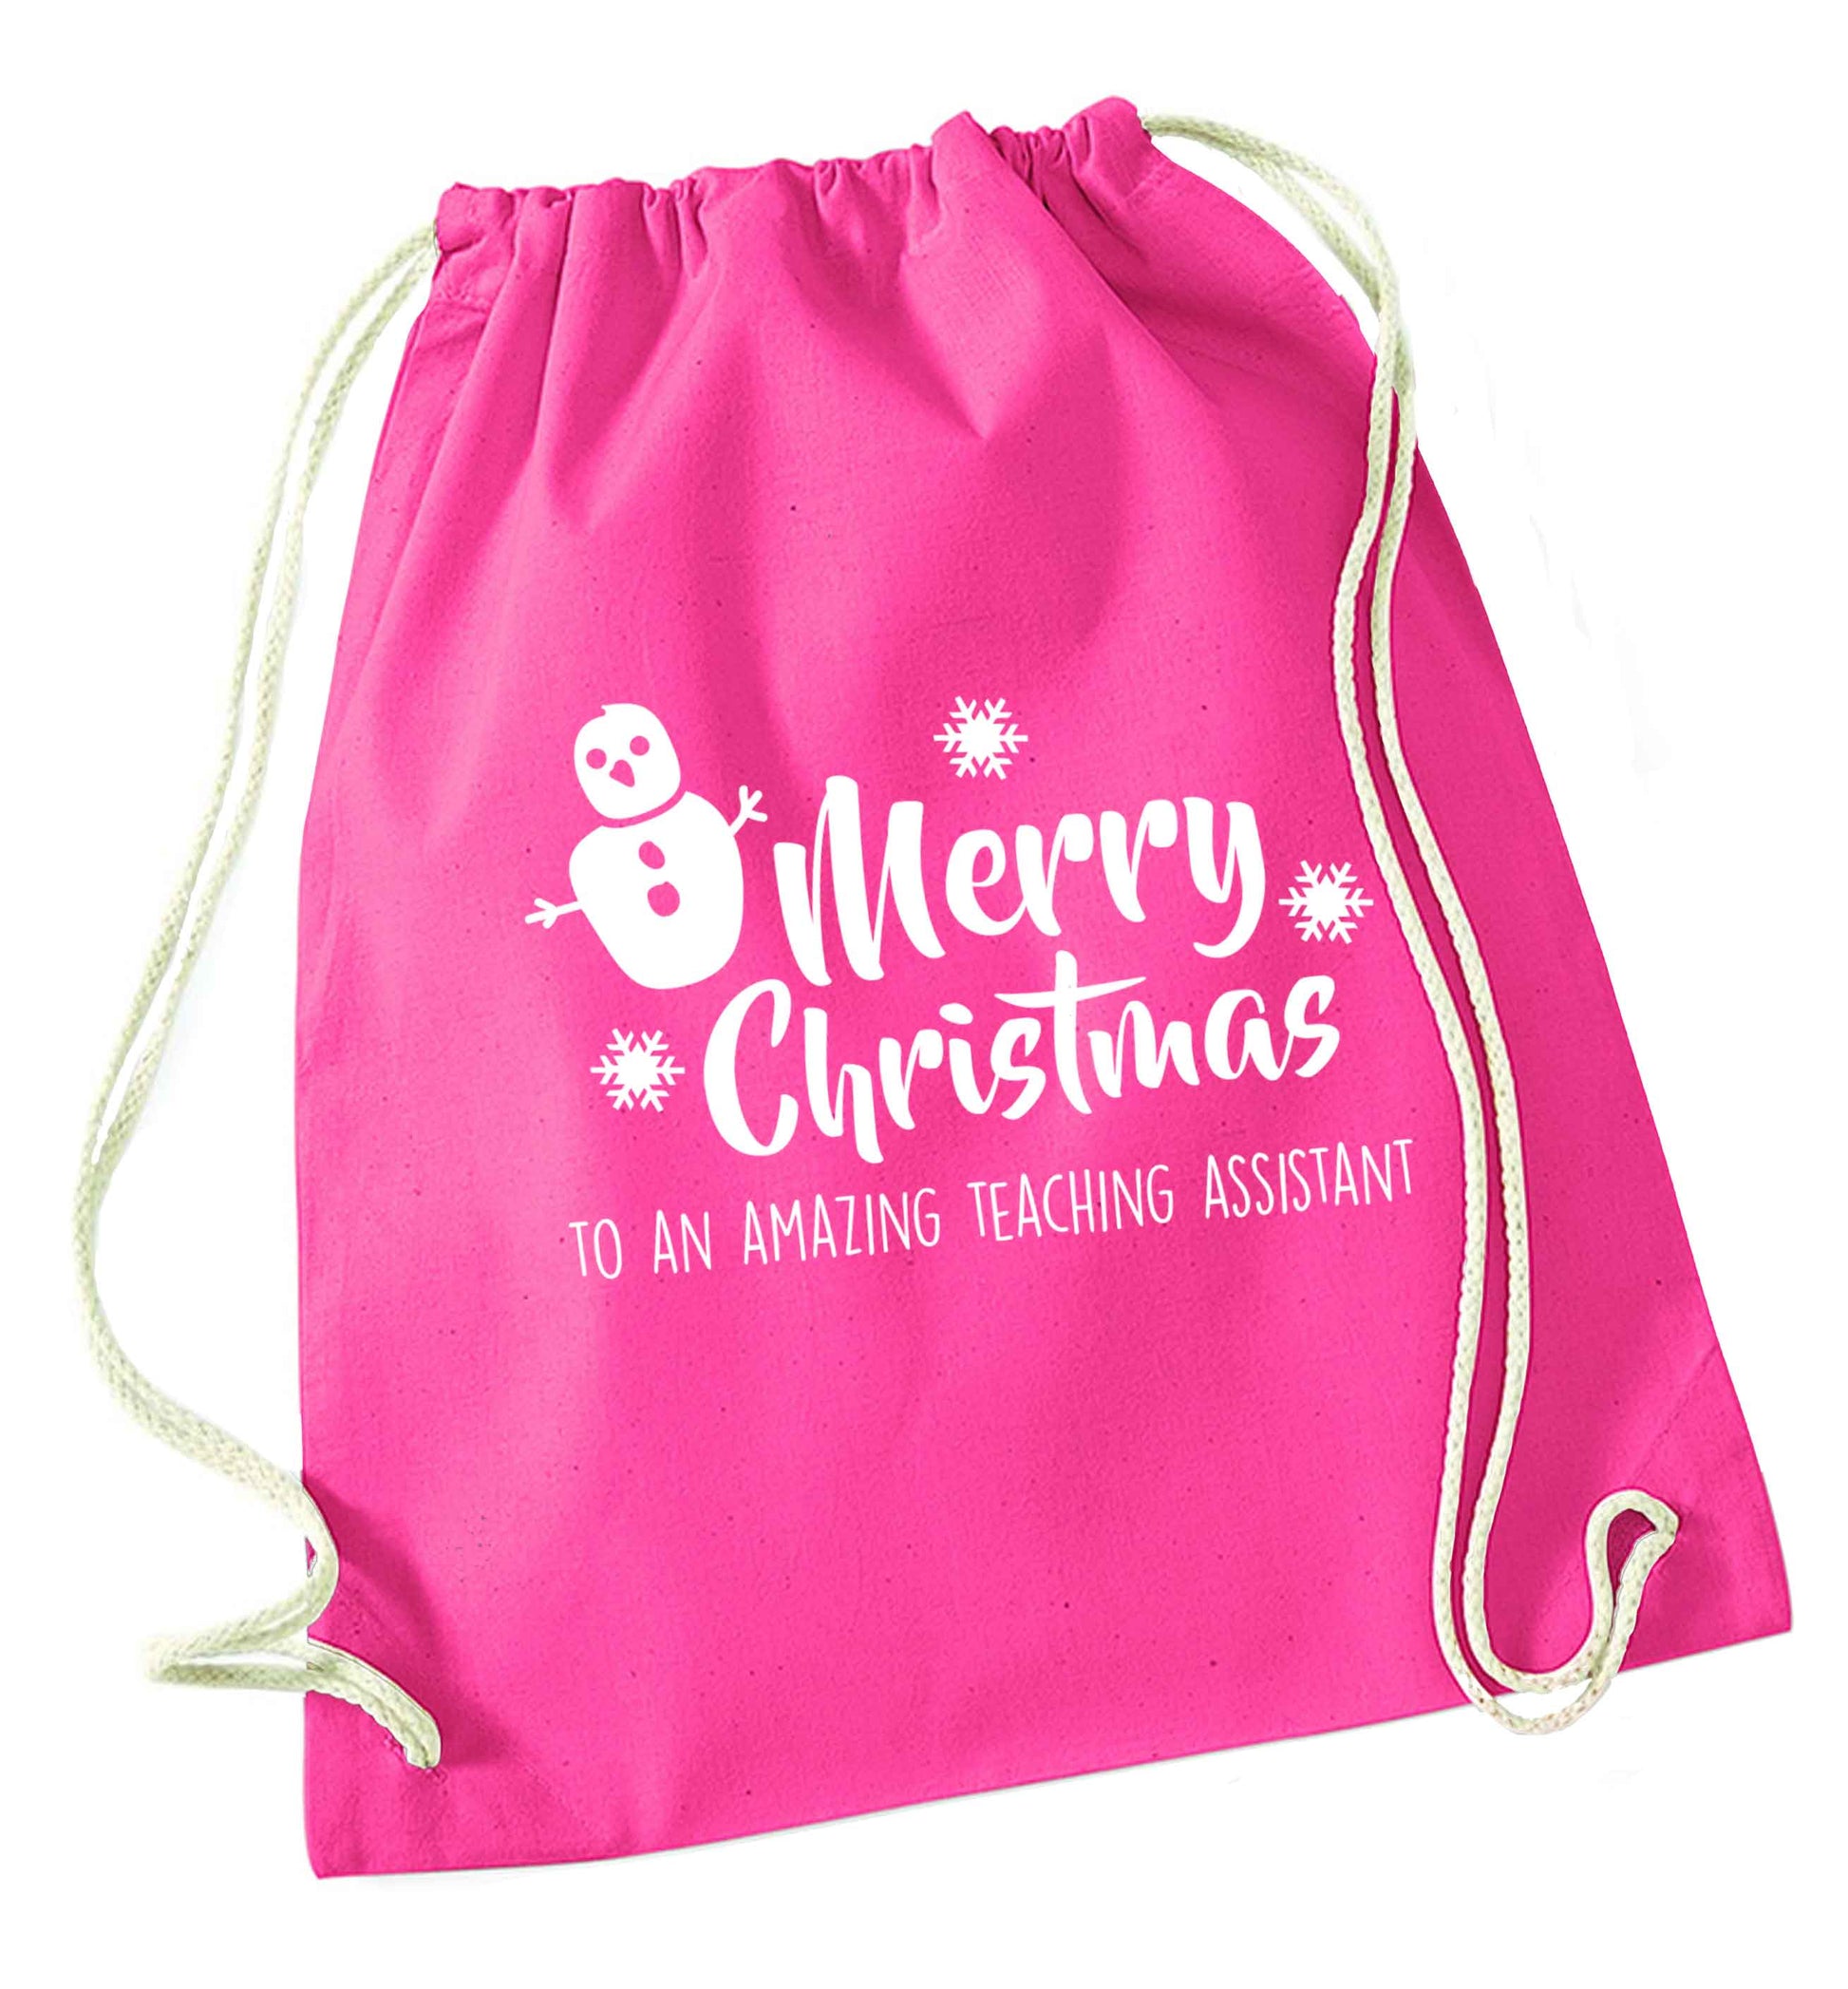 Merry christmas to my teacher pink drawstring bag